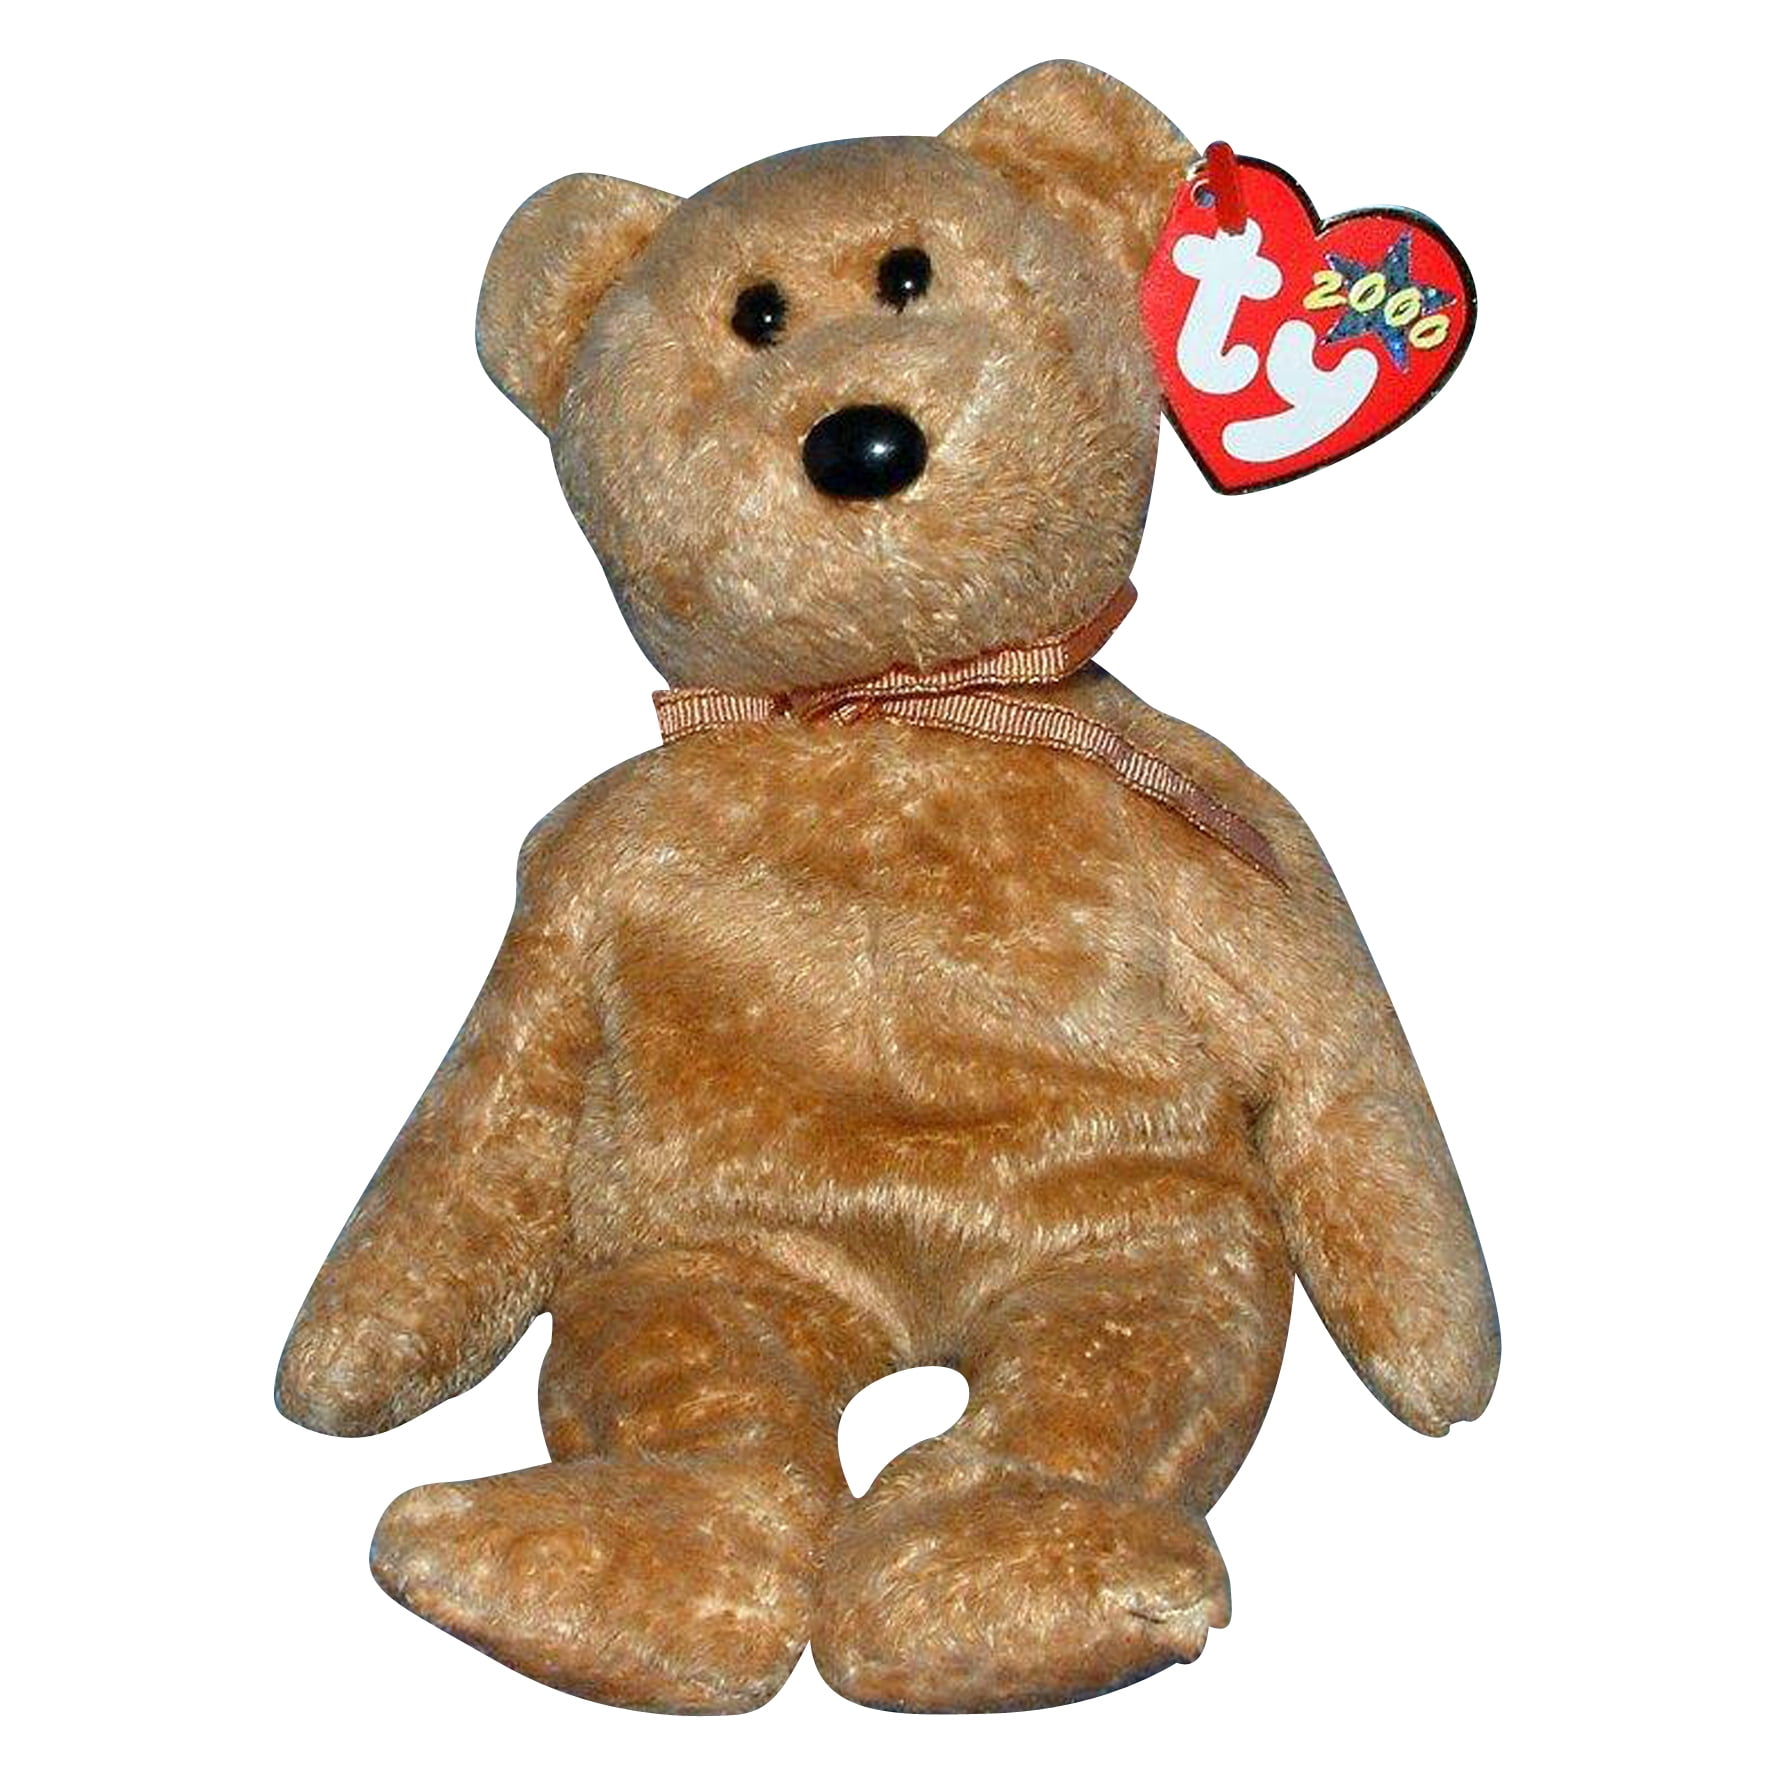 STEIFF TEDDY BEAR  PROMO ADVERTISING PLAYTHINGS CATALOG PRODUCT SUPPLEMENT 